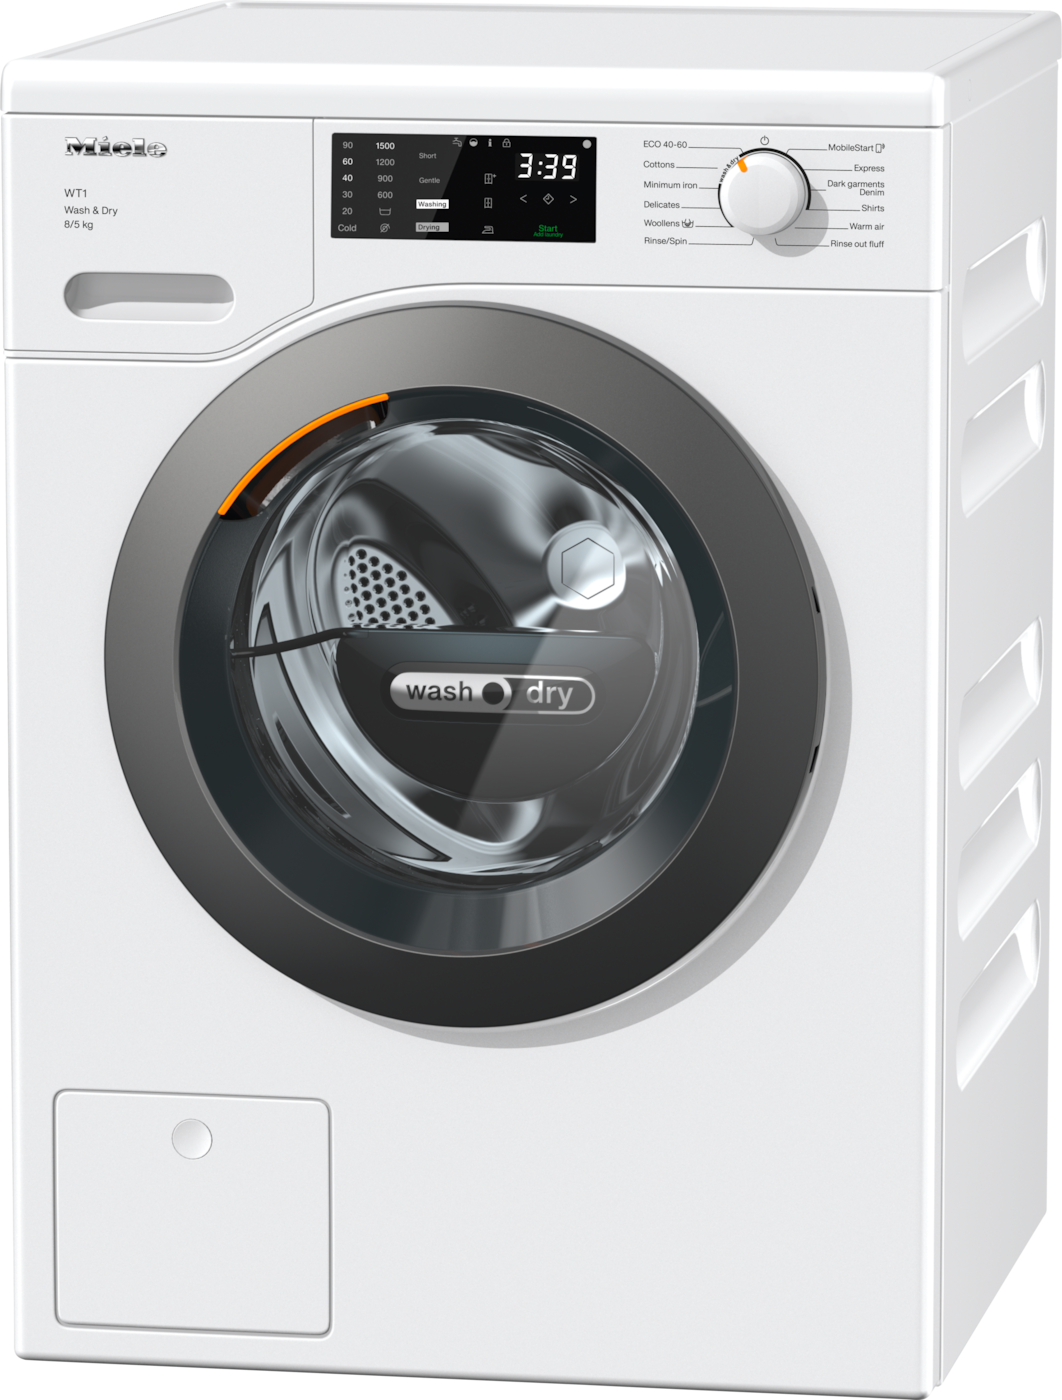 WTD160 WCS 8/5 kg - WT1 washer-dryer: 